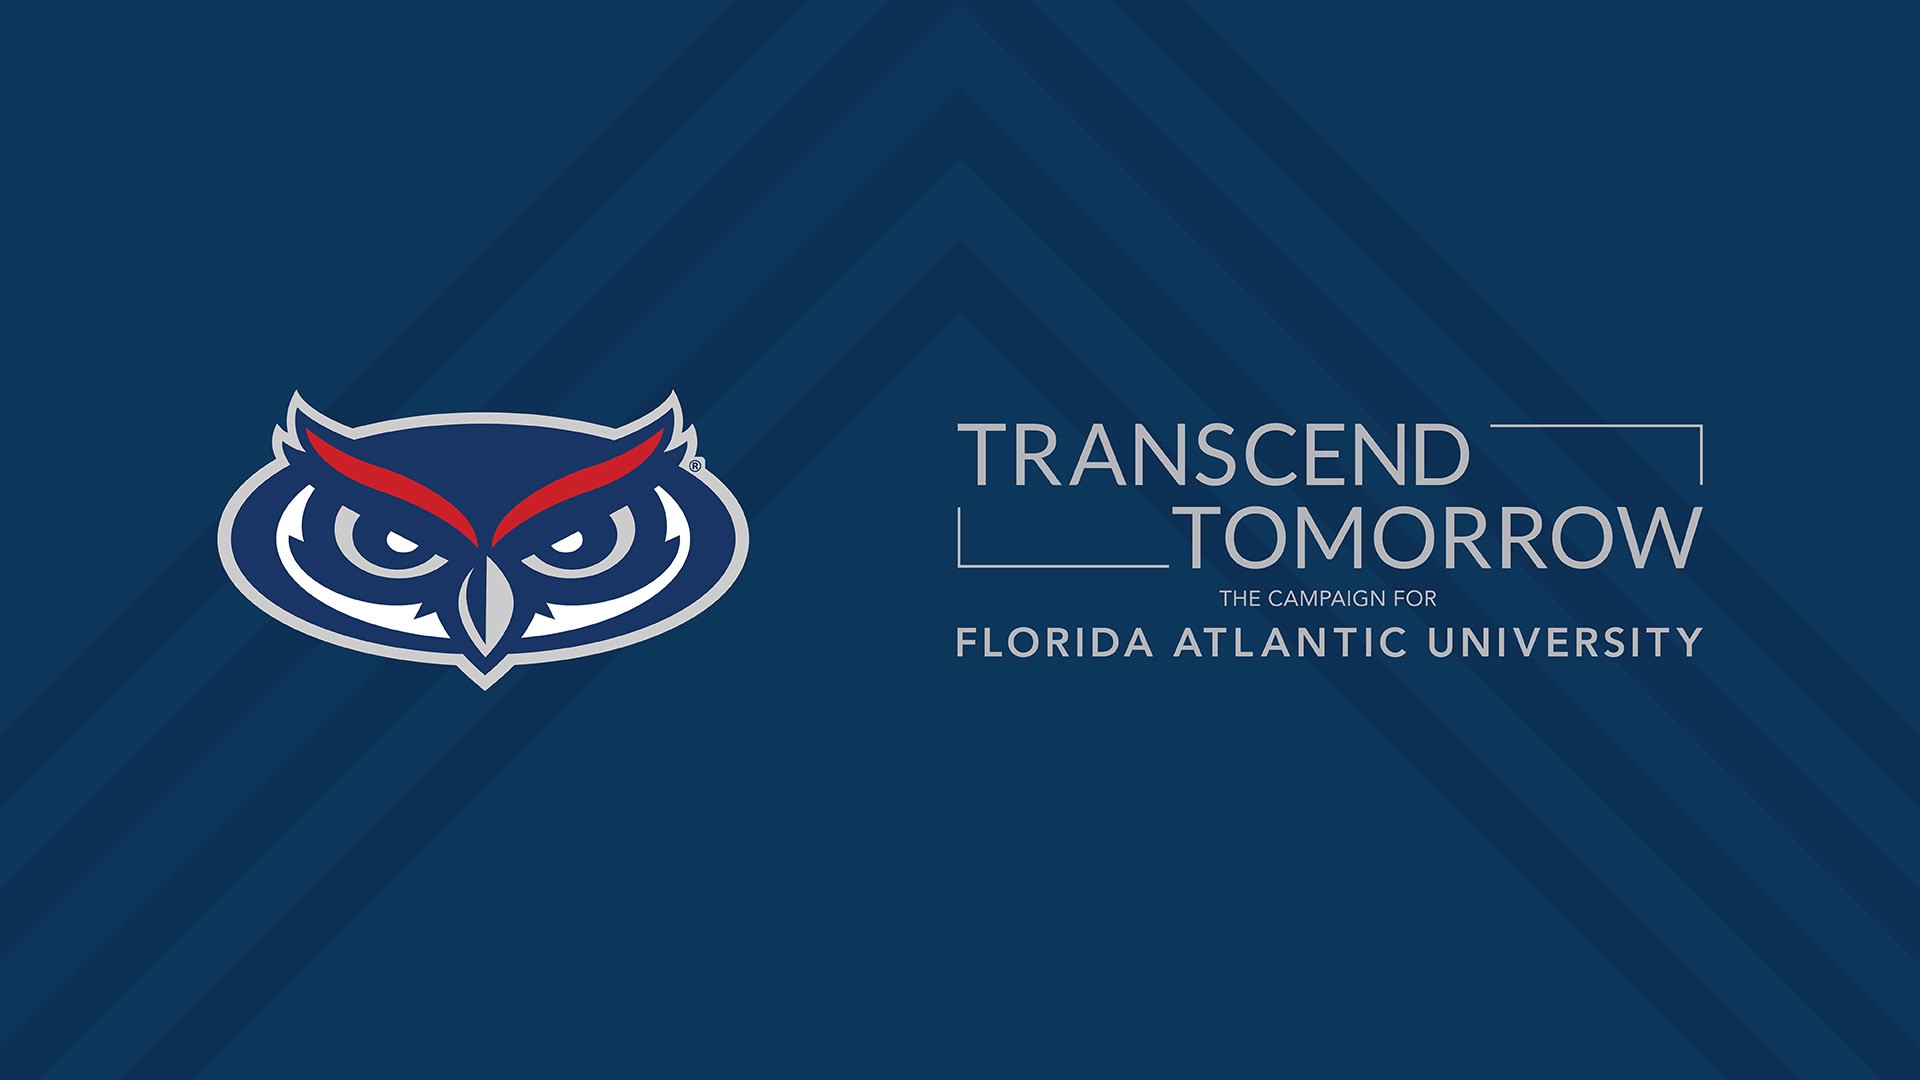 Transcend Tomorrow: The Campaign for Florida Atlantic University